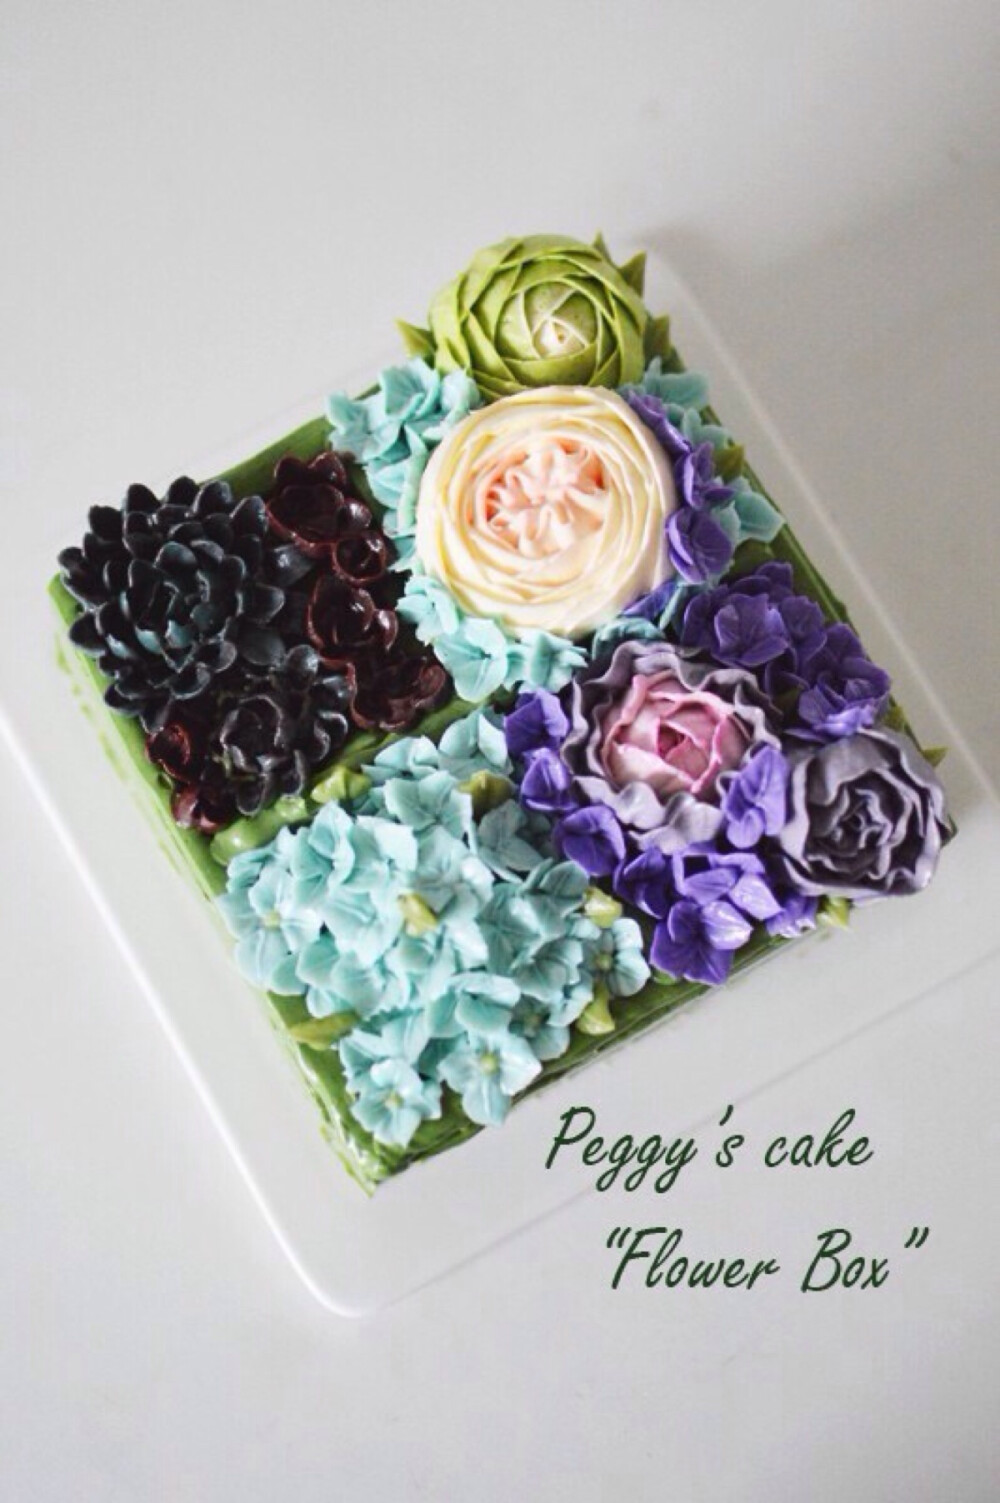 【食物文艺】裱花蛋糕